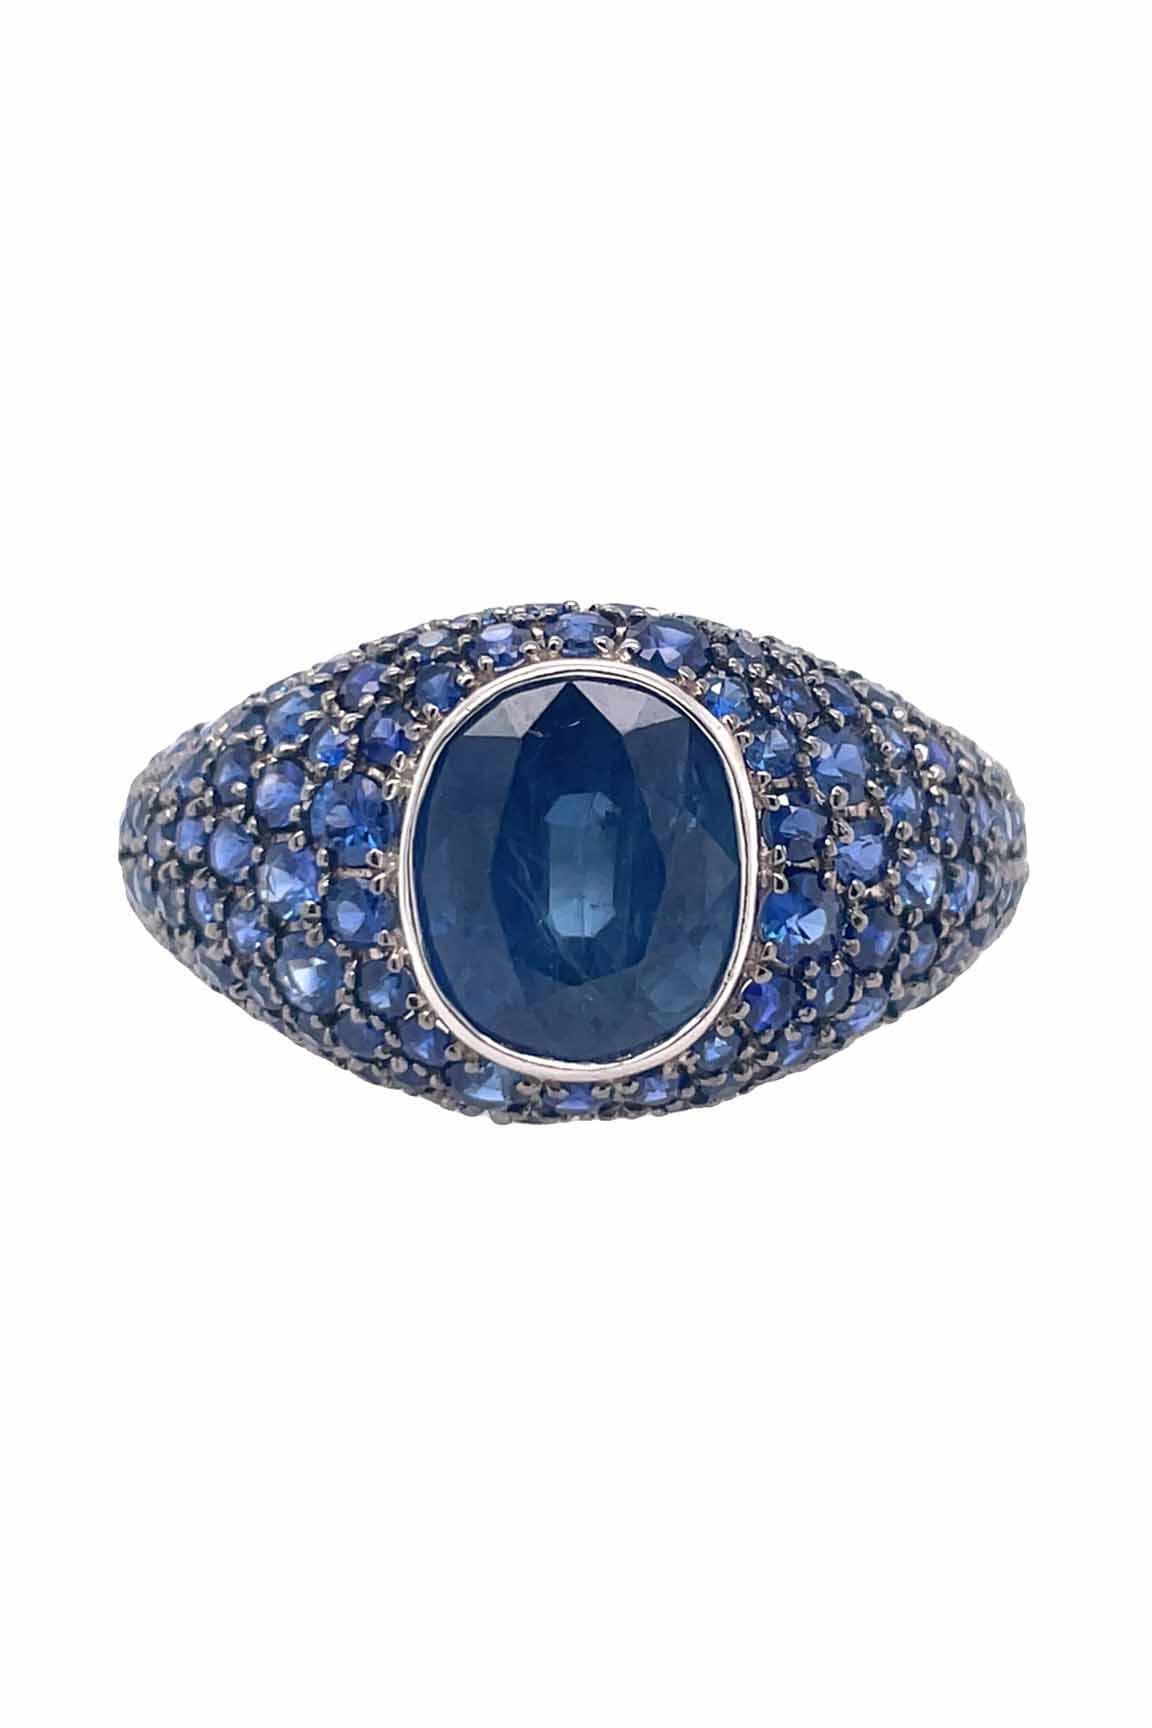 PIRANESI-Blue Sapphire Dome Ring-WHITE GOLD